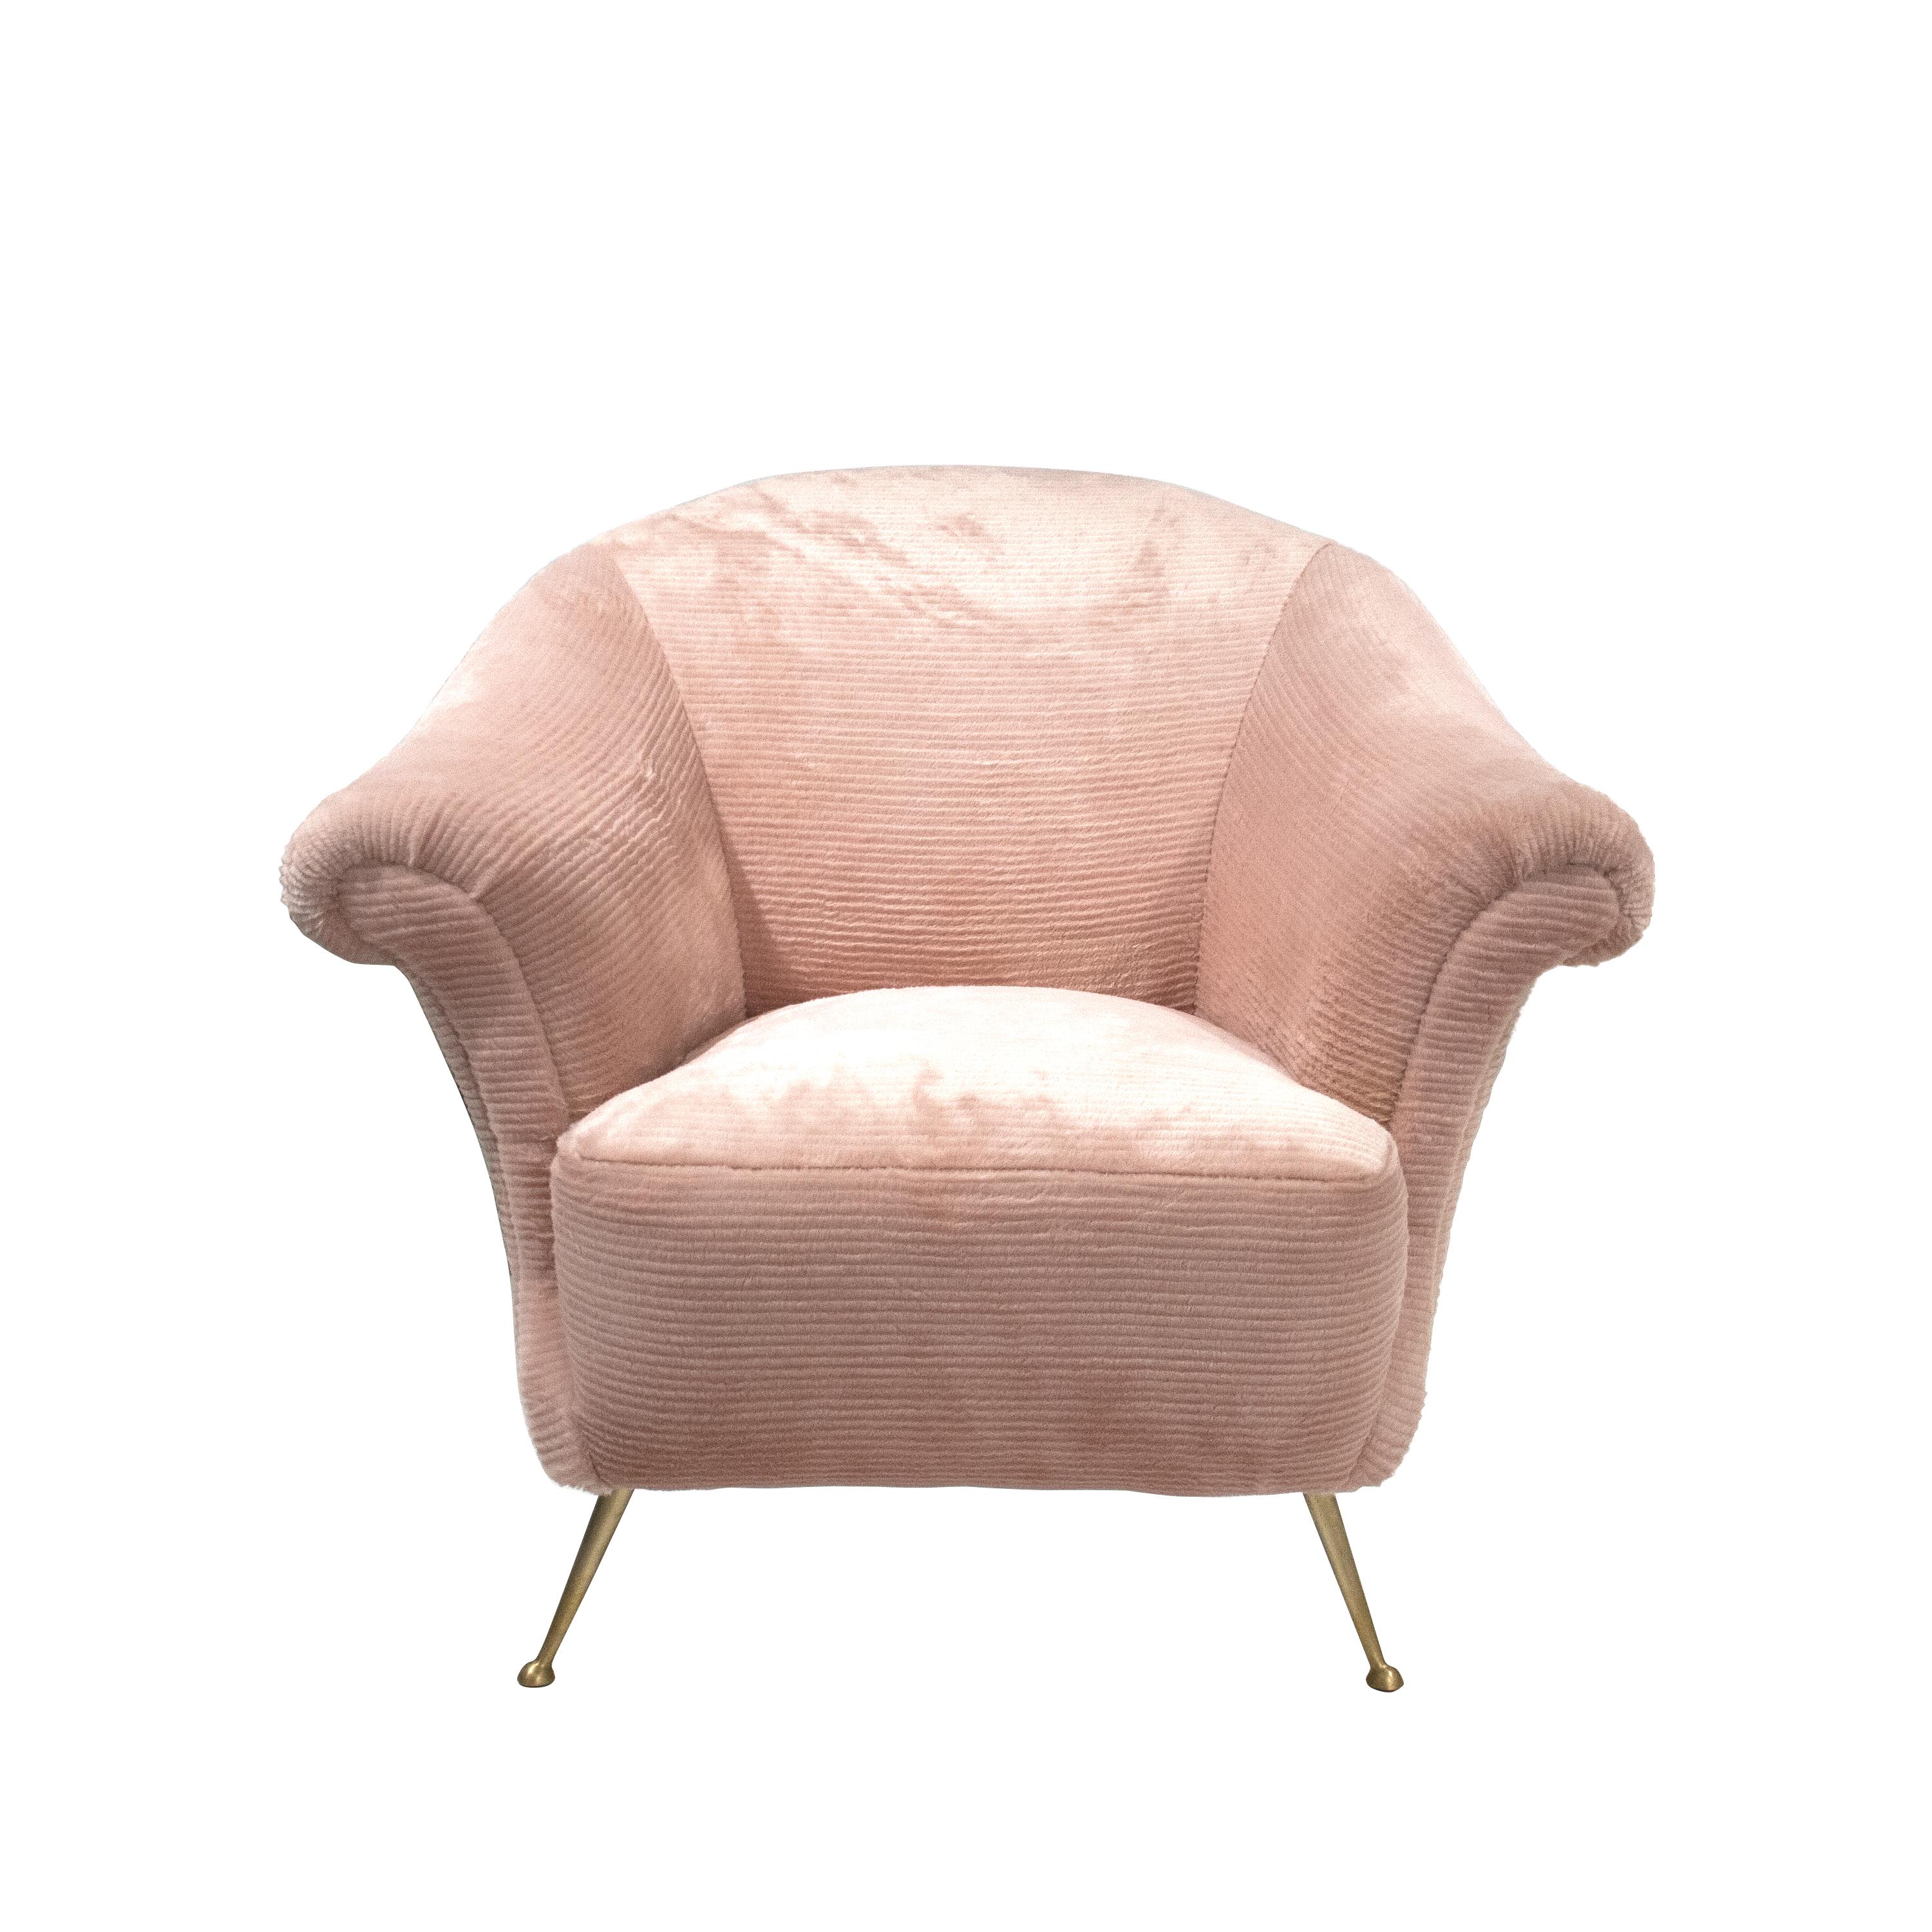 Mid-Century Modernes Sesselpaar aus Massivholz mit pinkfarbenem Kunstfellbezug und Messingbeinen.